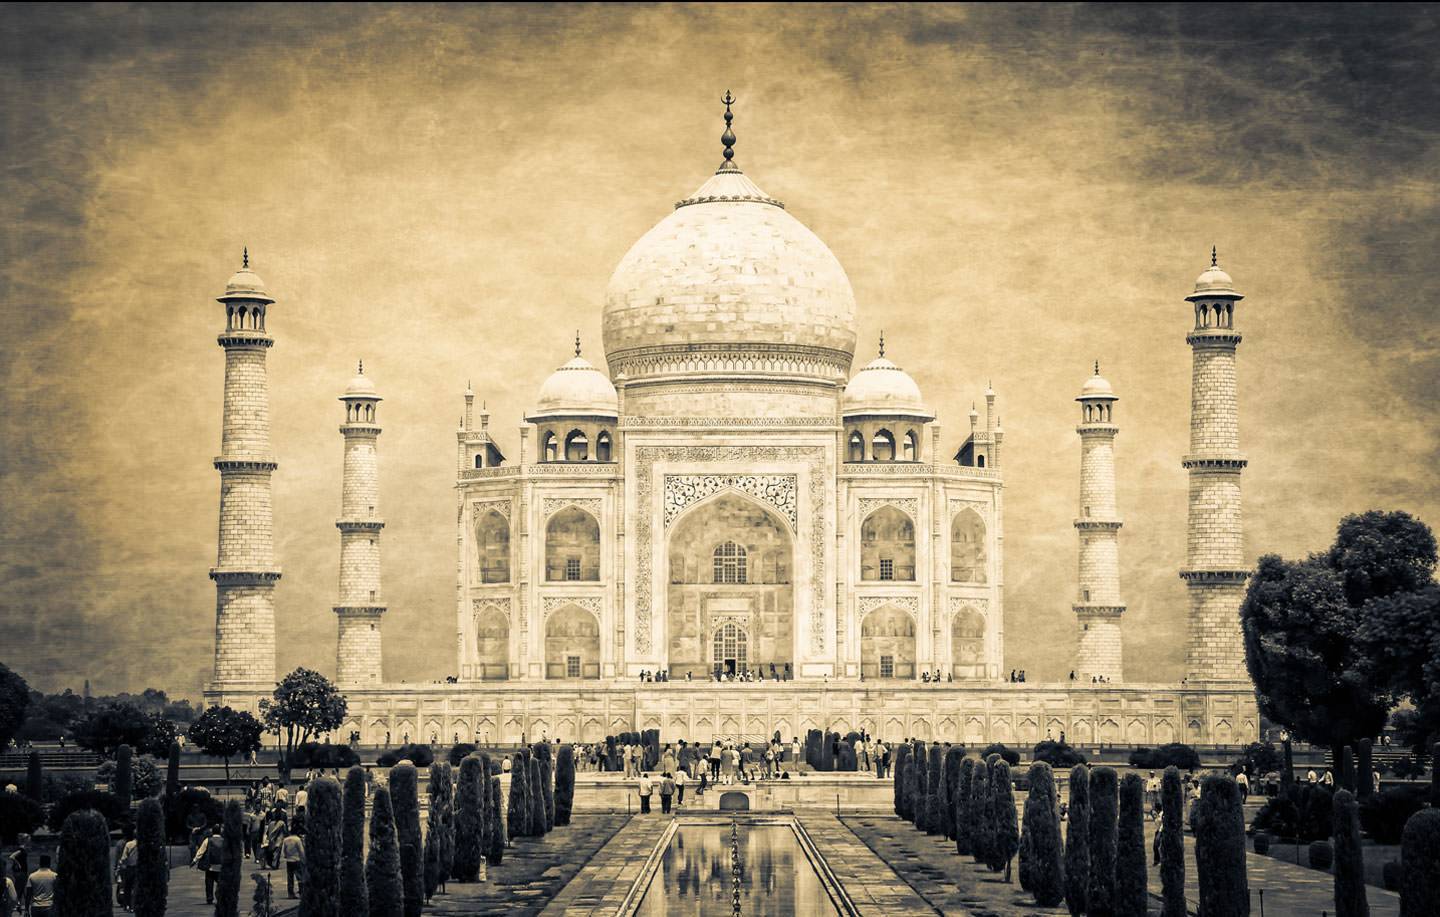 Taj An architectural marvel & epitome of love